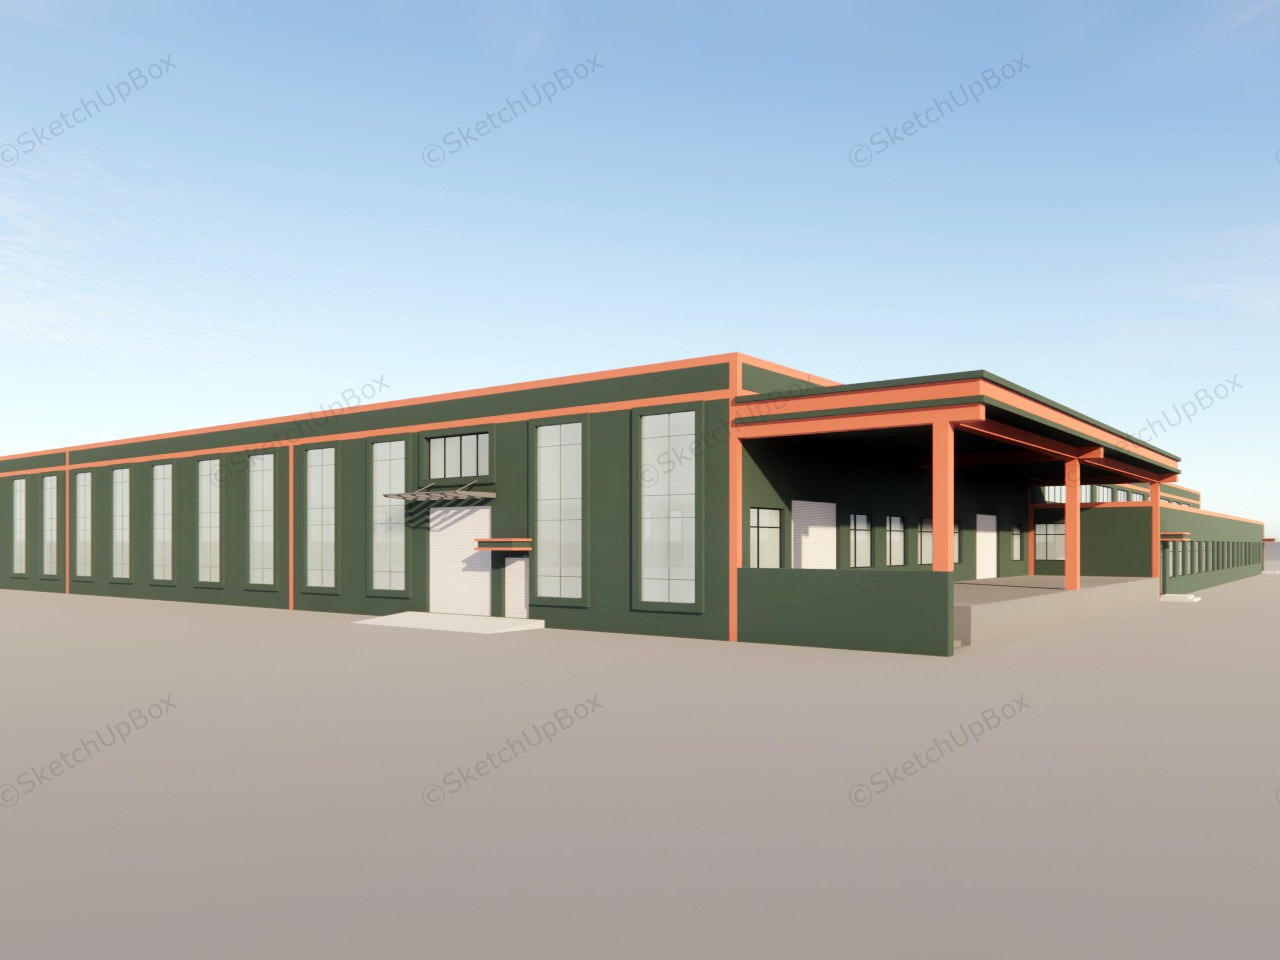 Warehouse Logistics Buildings sketchup model preview - SketchupBox